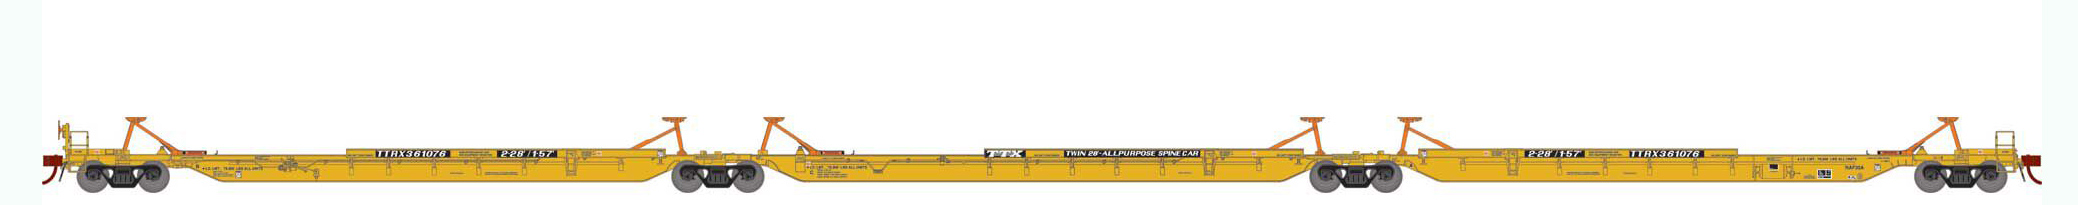 Trailer Train / TTRX